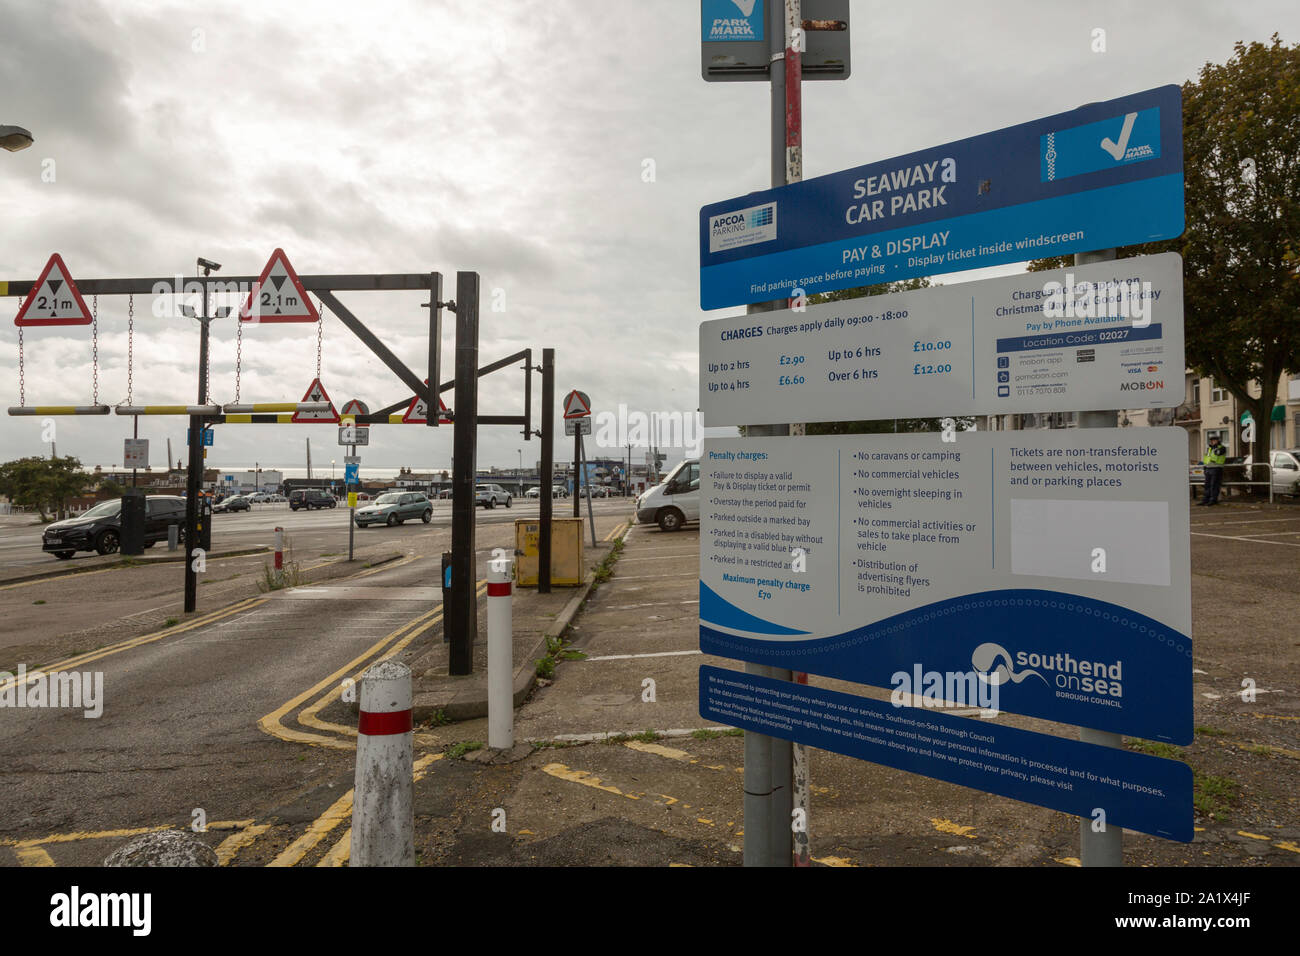 The Seaway car park. Southend on Sea, UK Stock Photo - Alamy